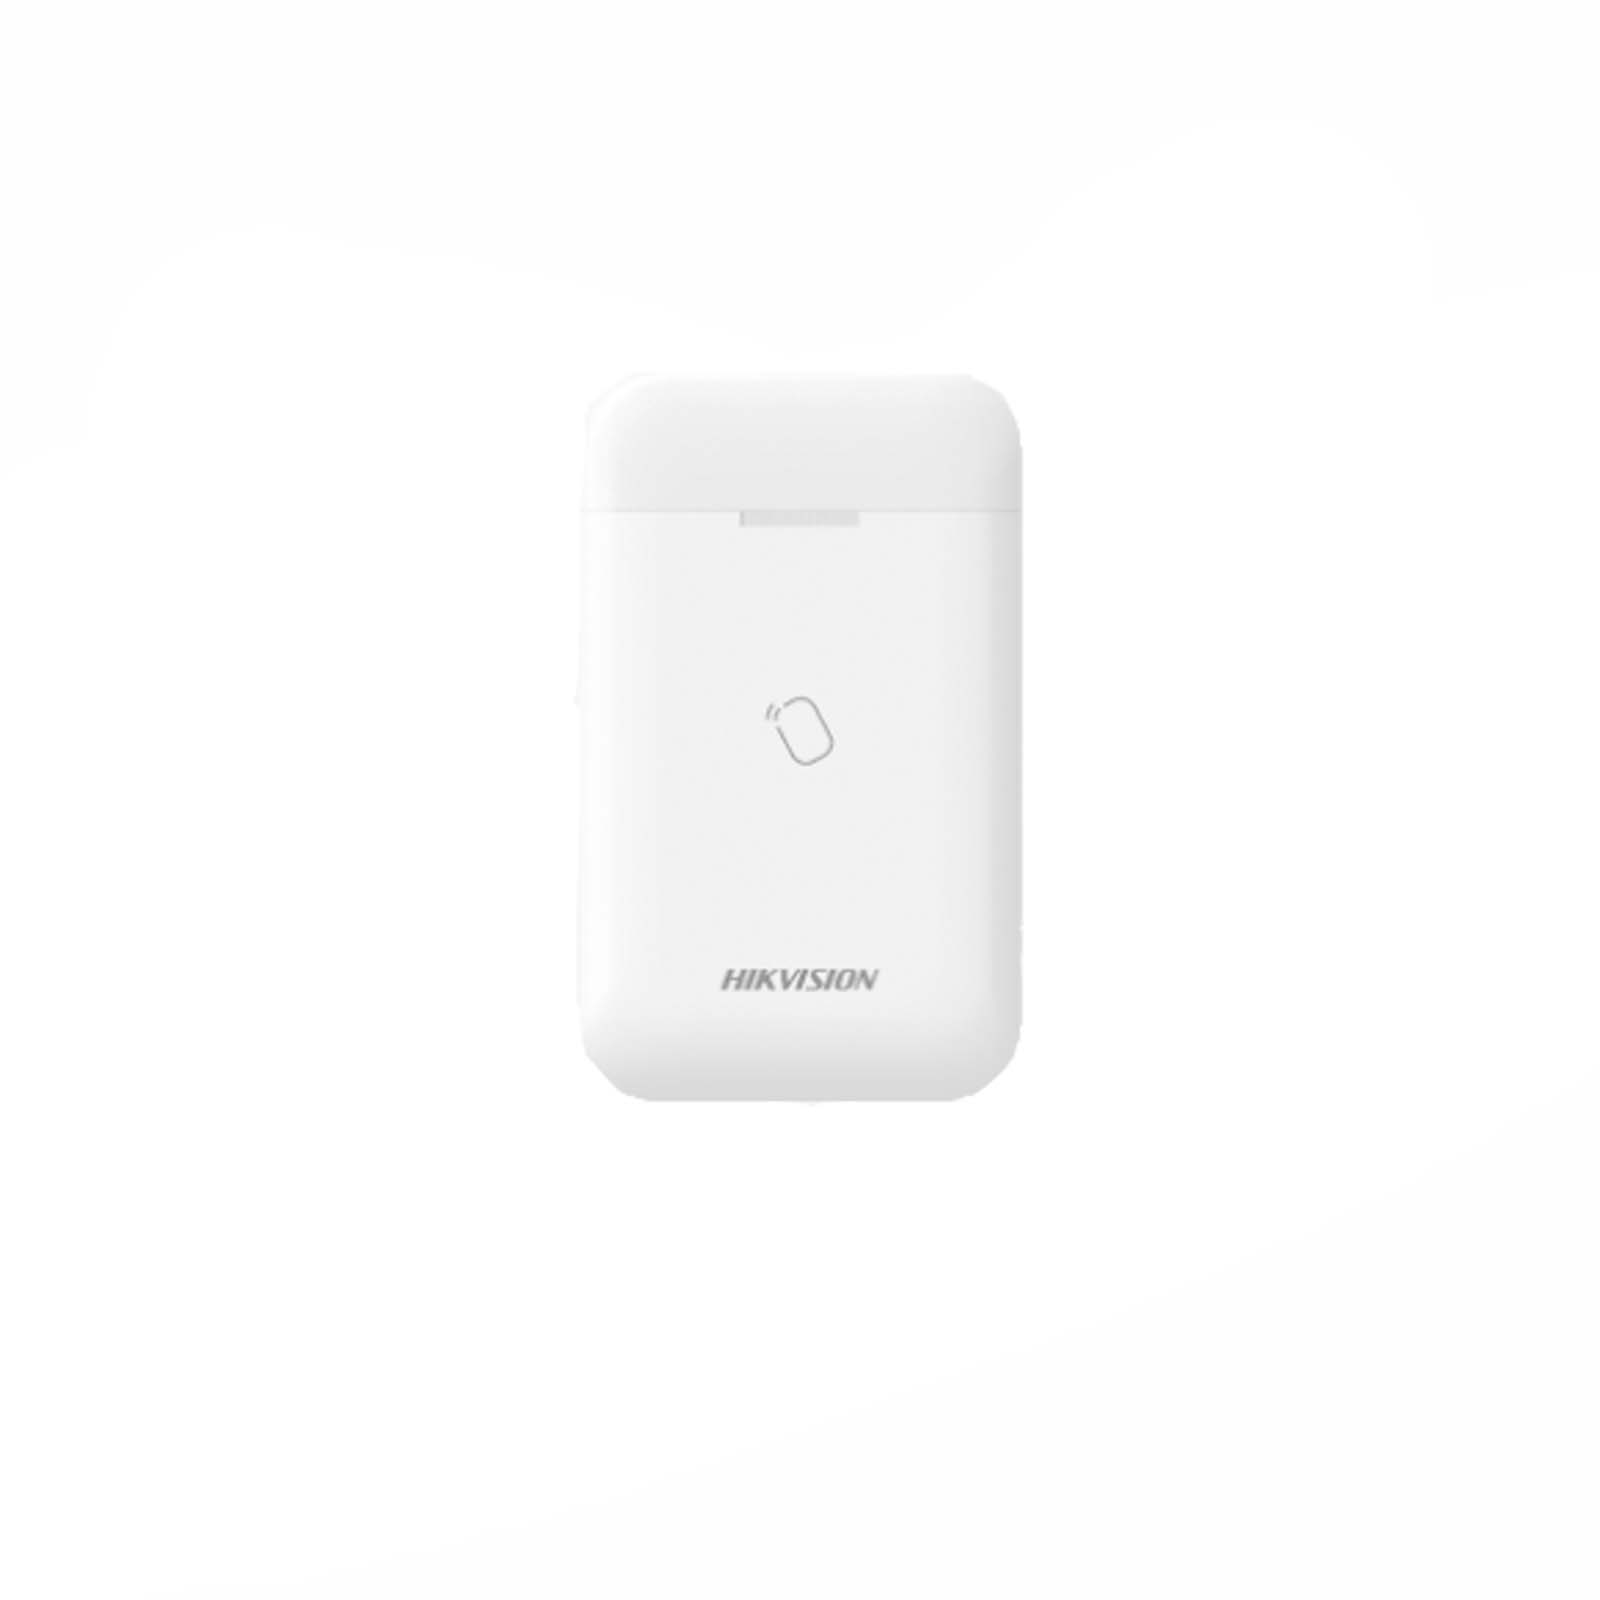 Wireless tag reader - axiom hikvision